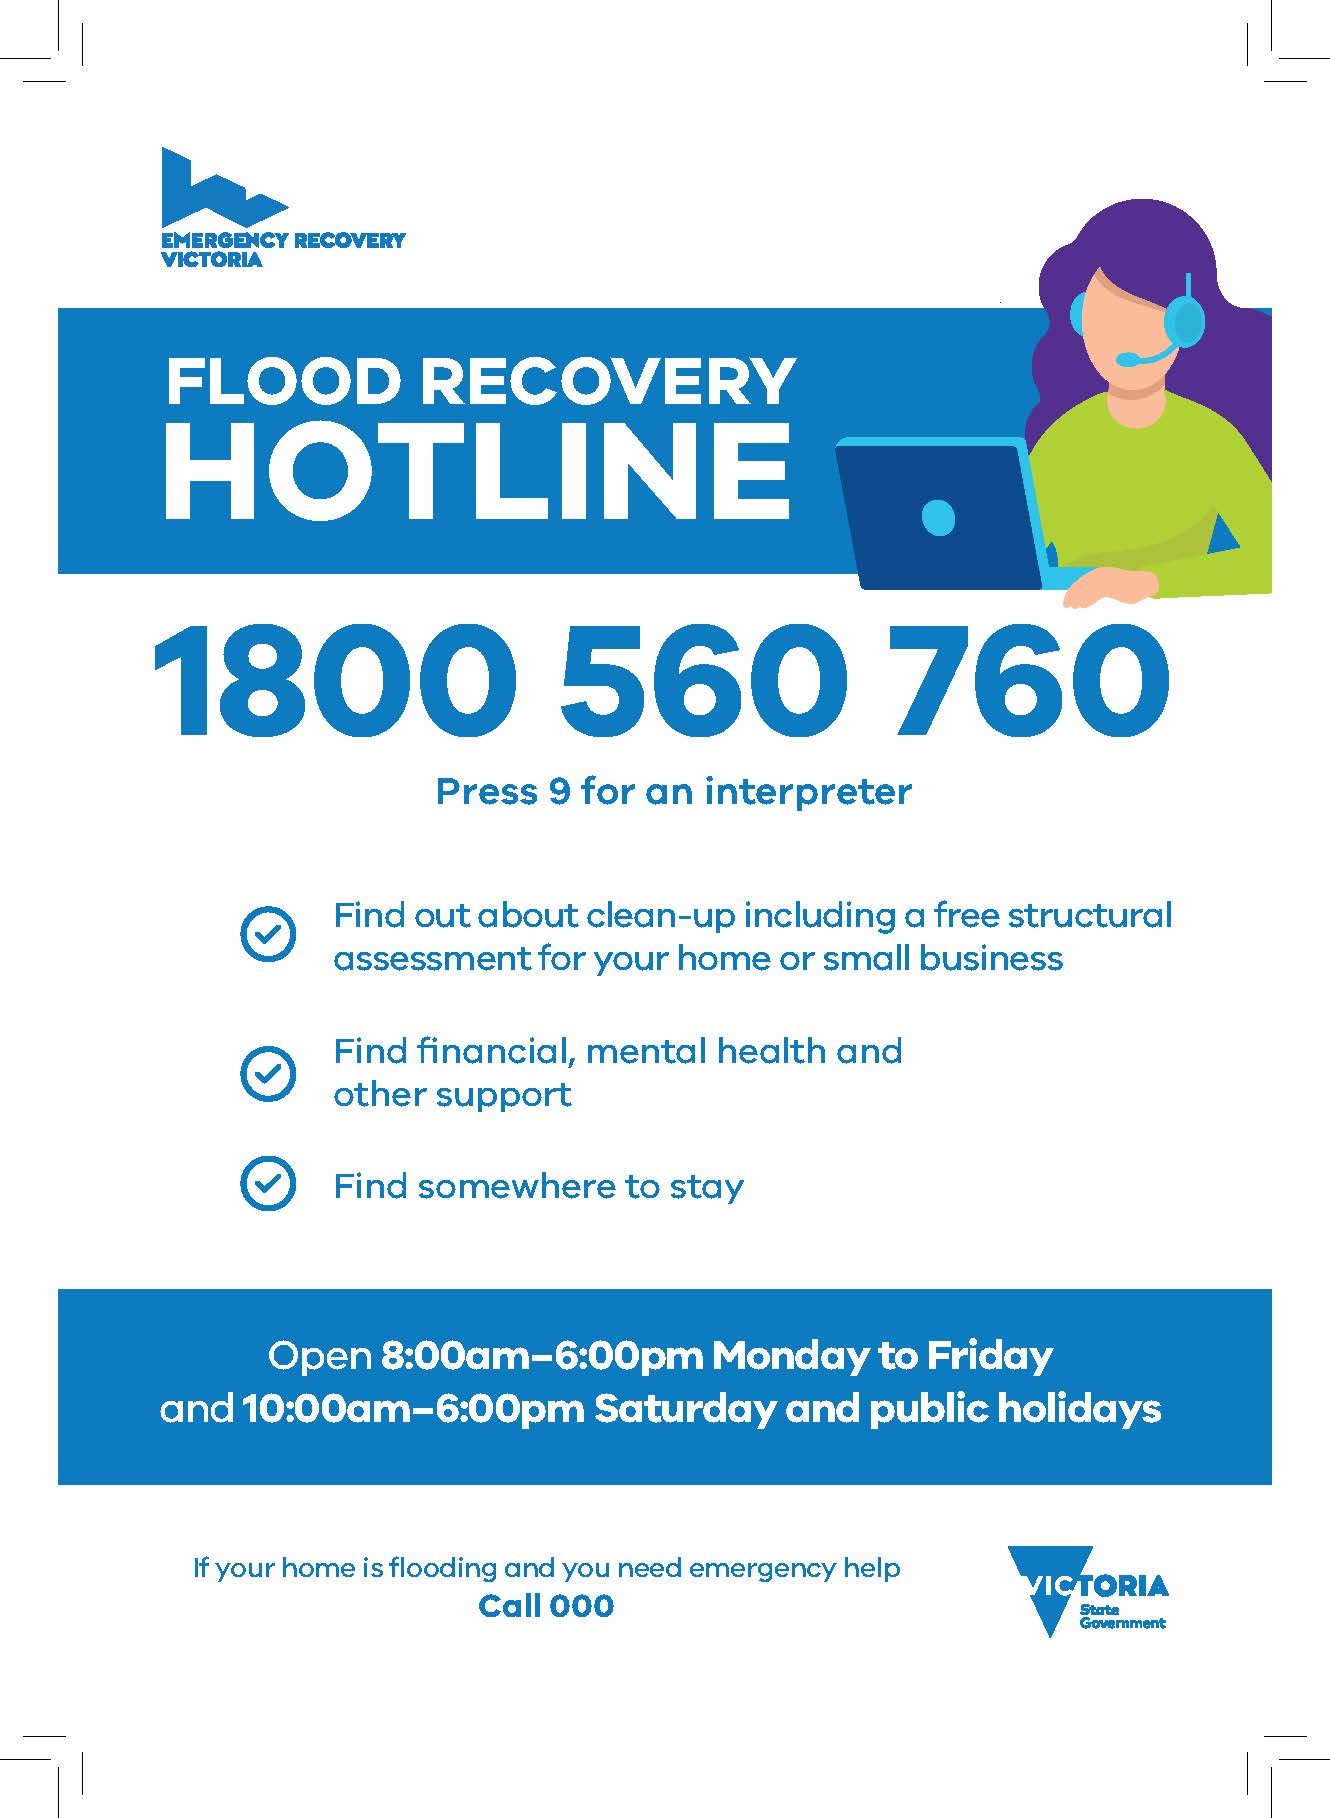 ERV Recovery Support Hotline Poster - PRINT.jpg